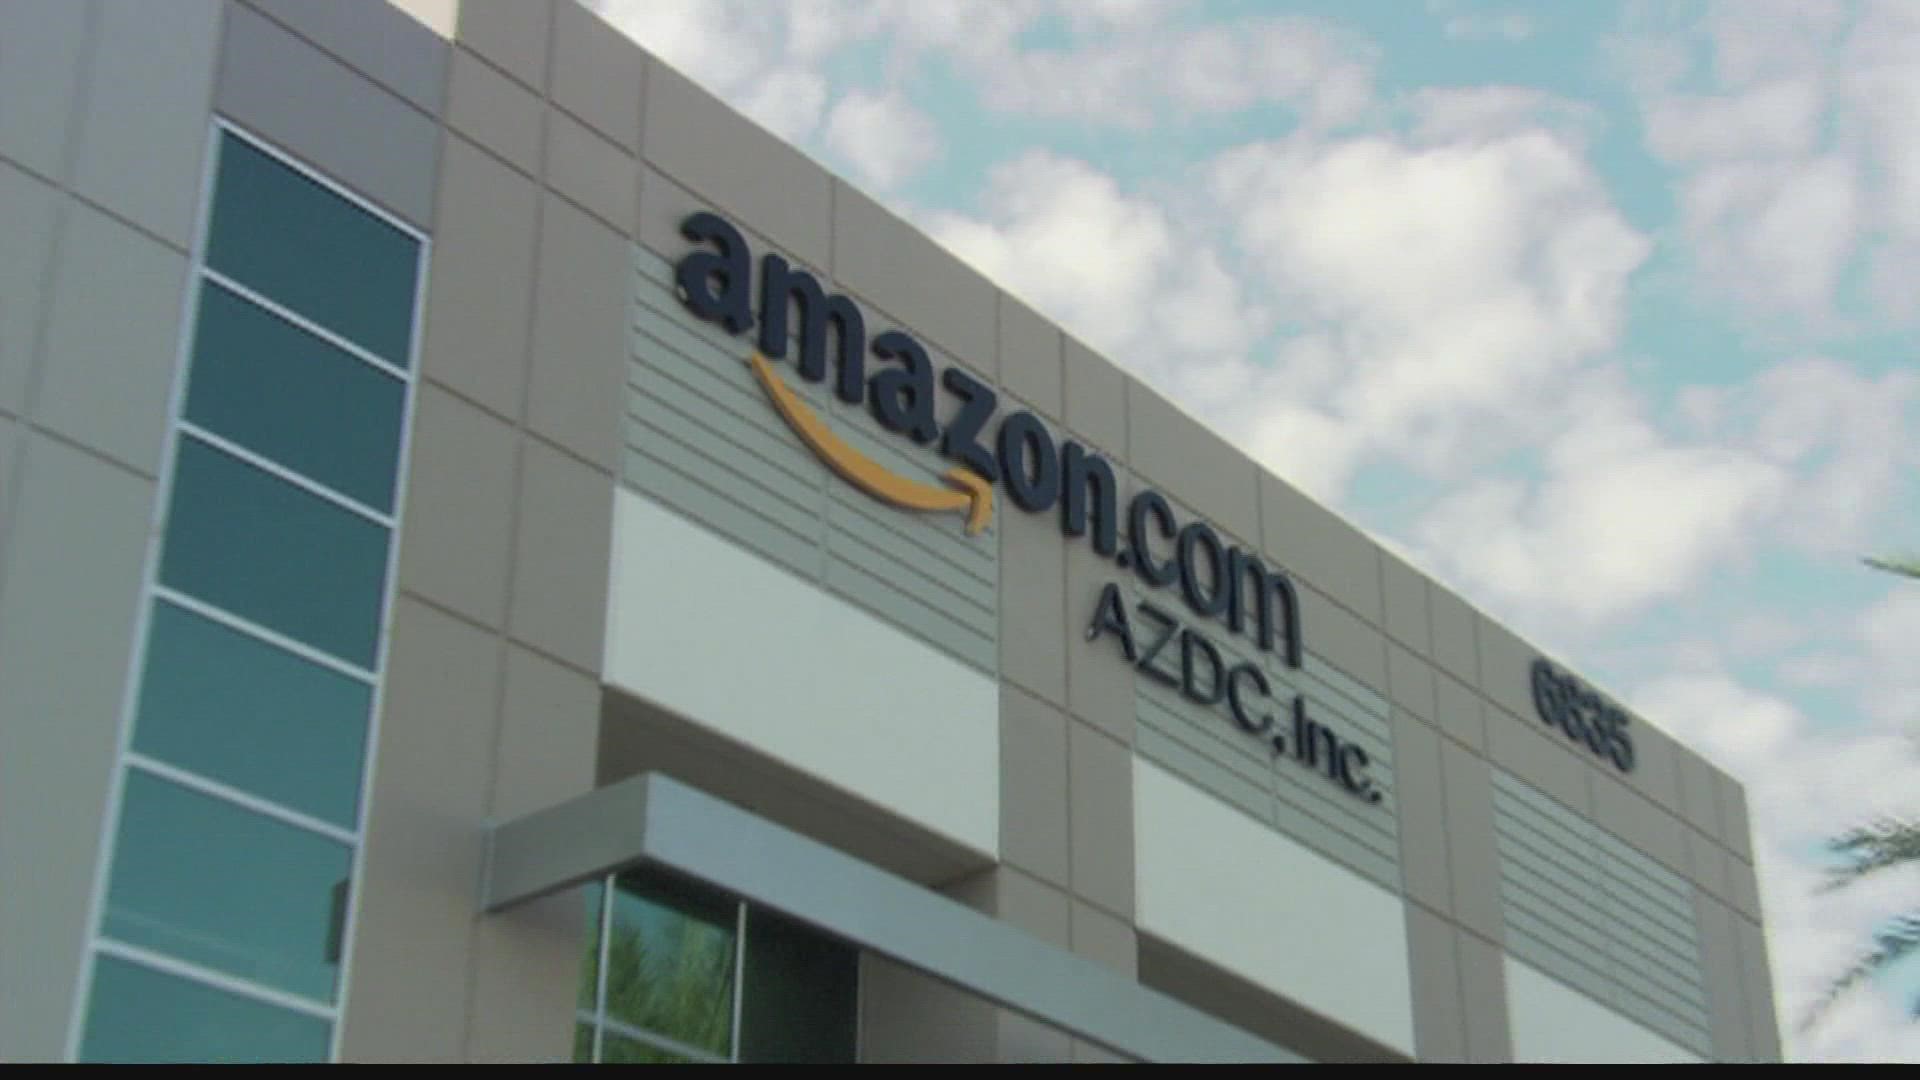 People spent $11 billion dollars during last year's Amazon prime days.